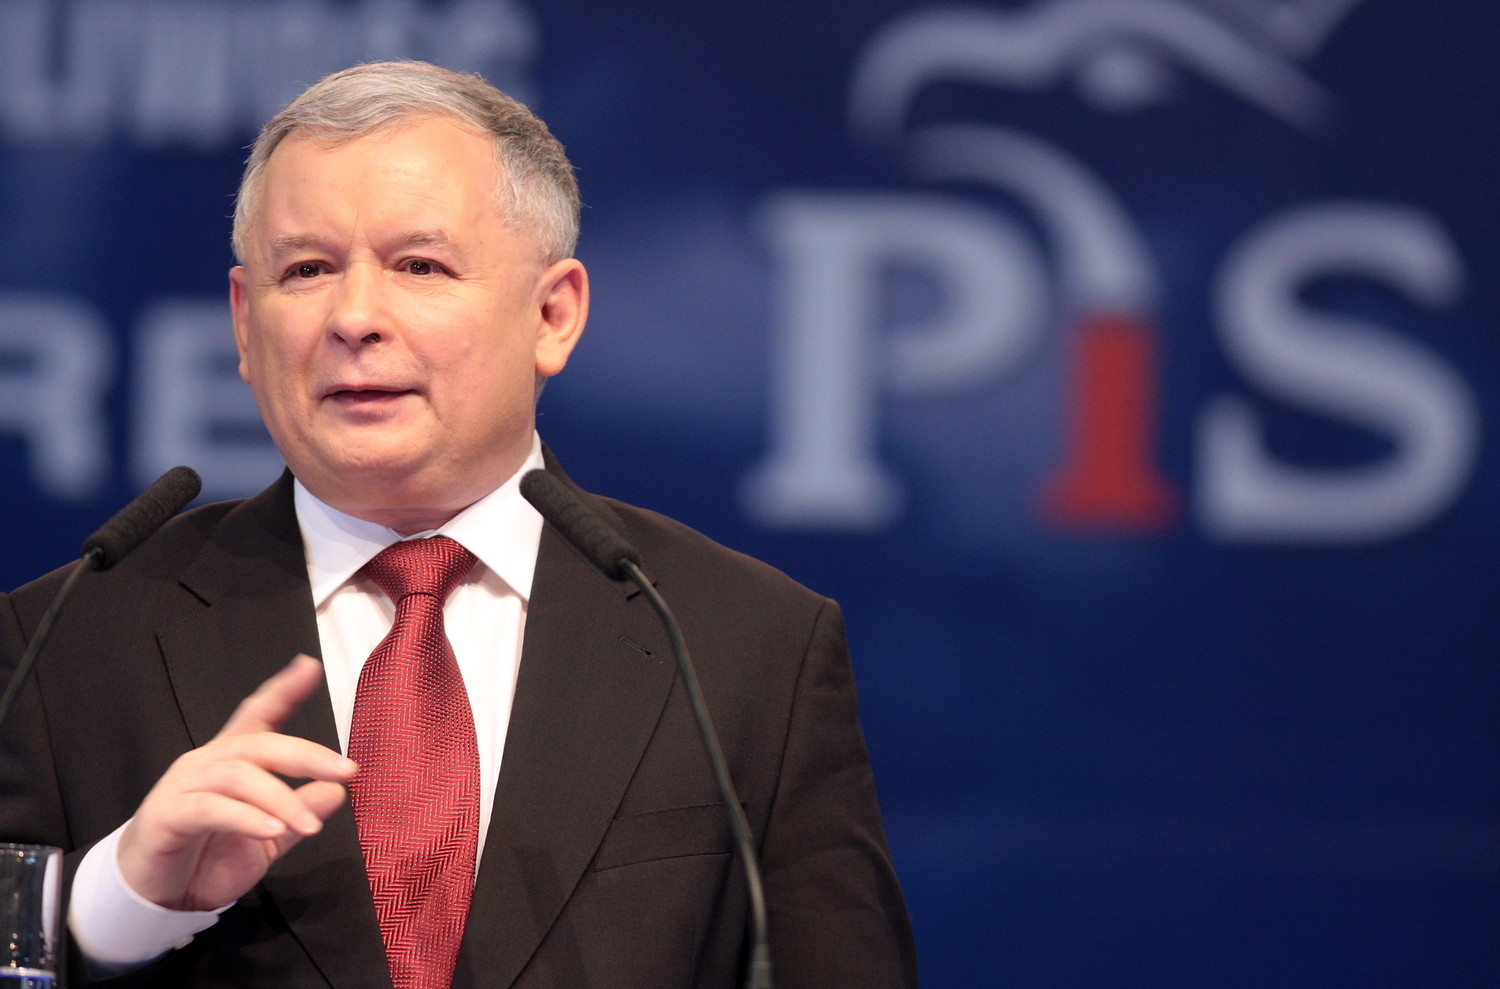 Ruling party leader Jarosław Kaczyński (photo credit: Penn Political Review